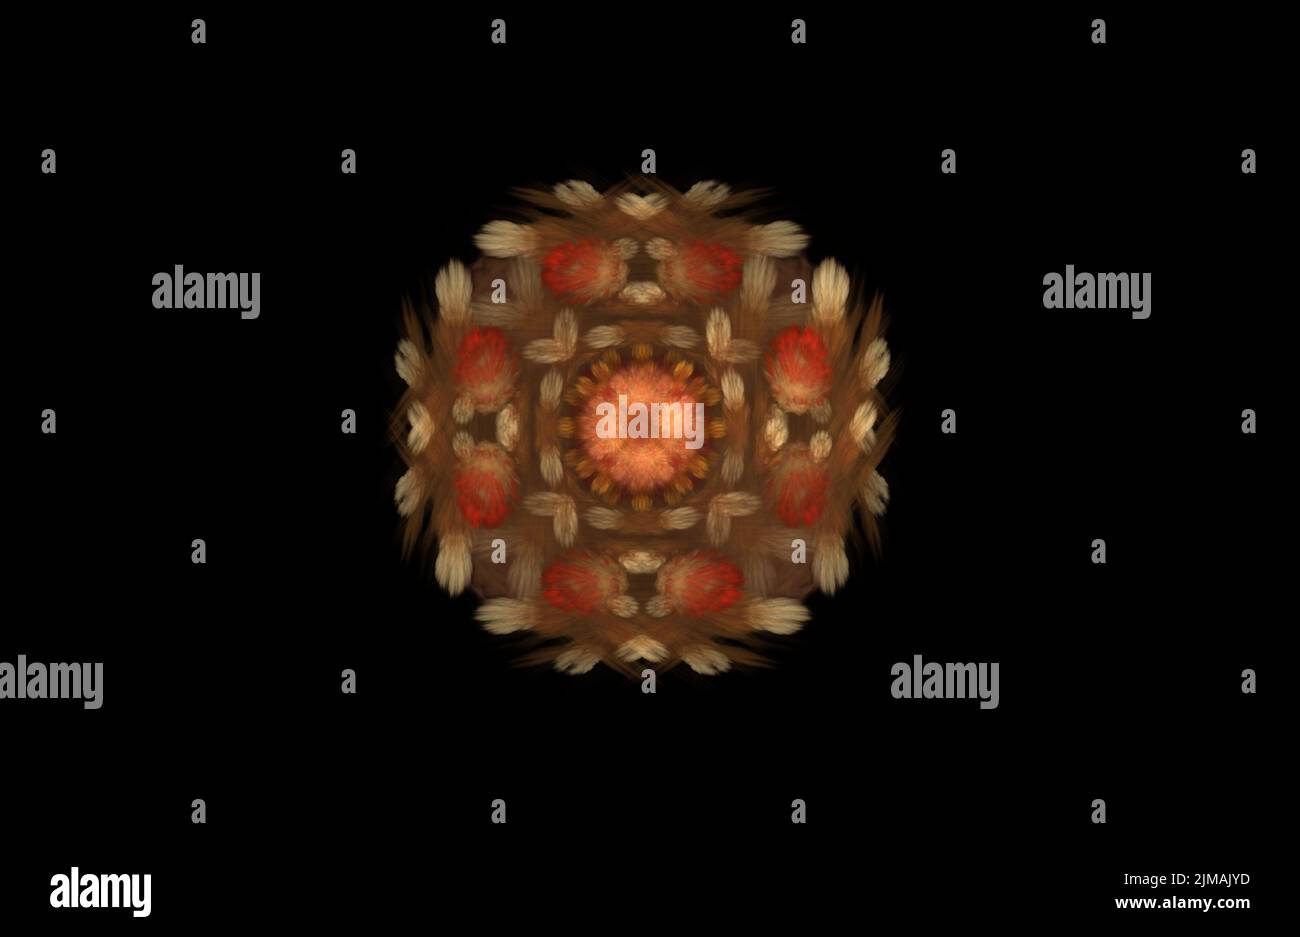 Abstract fractal golden symmetric figure on black Stock Photo